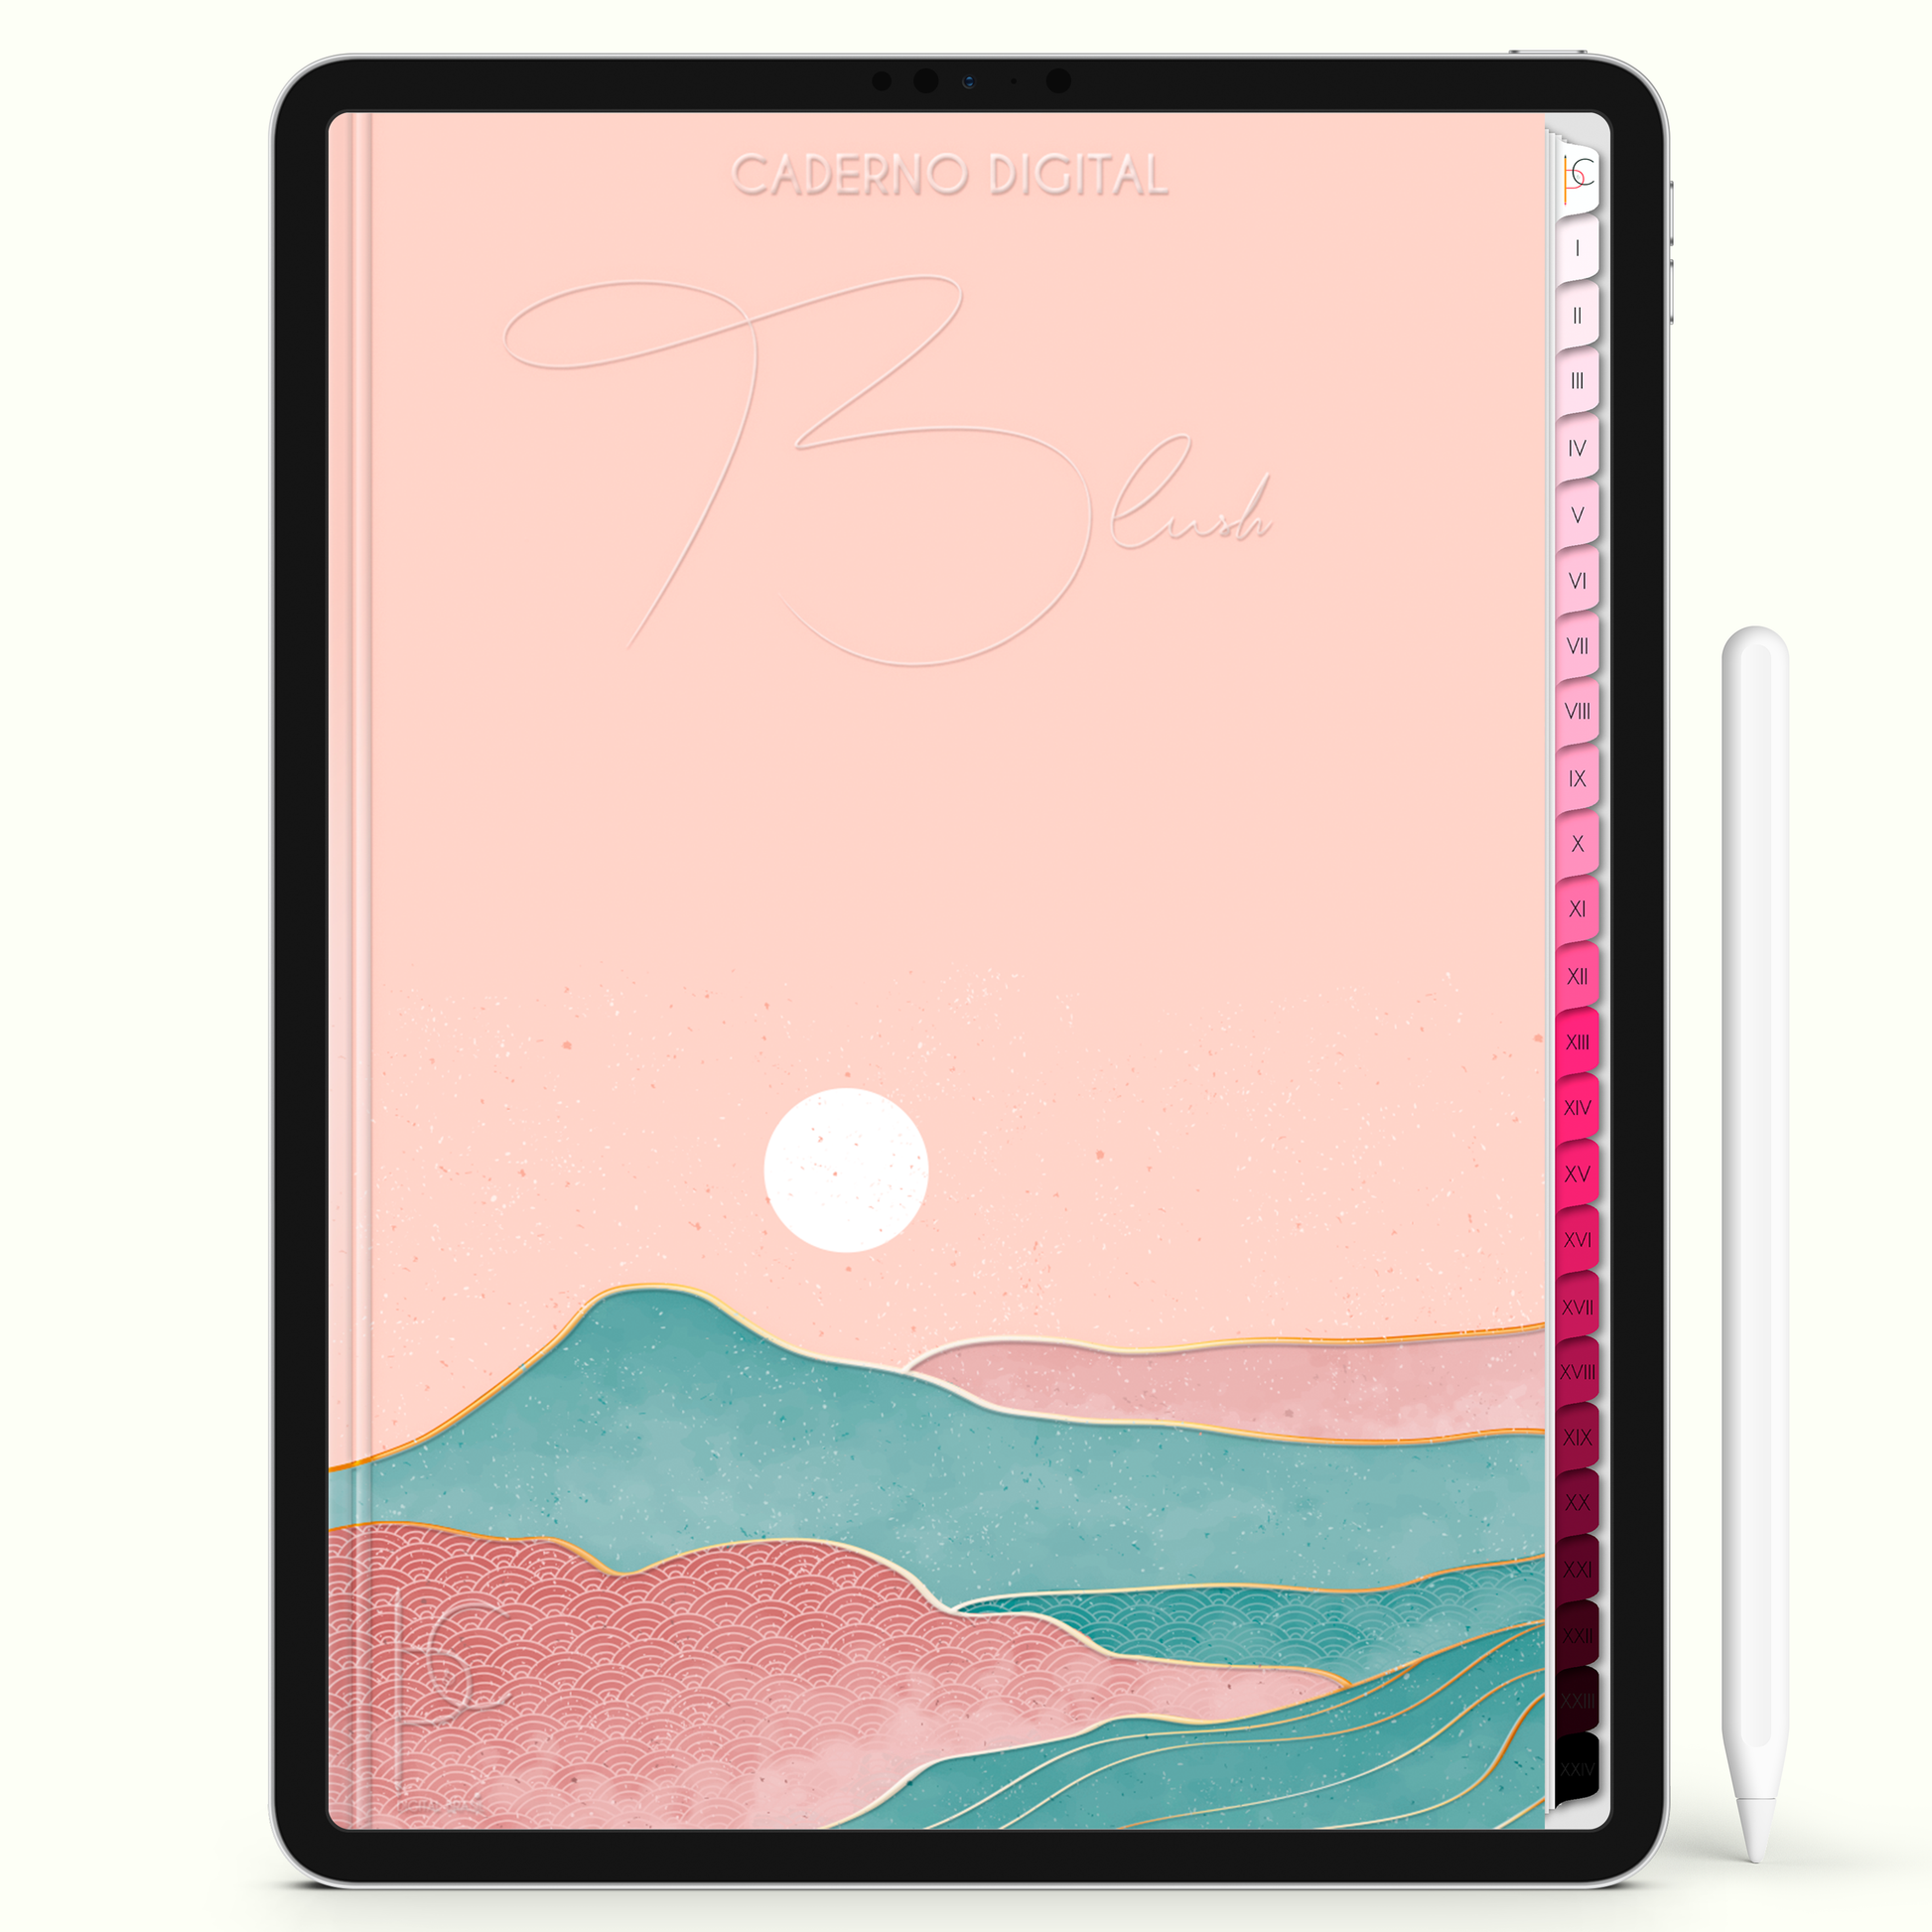 Caderno Digital Blush Notes 24 Matérias • iPad e Tablet Android • Download instantâneo • Sustentável